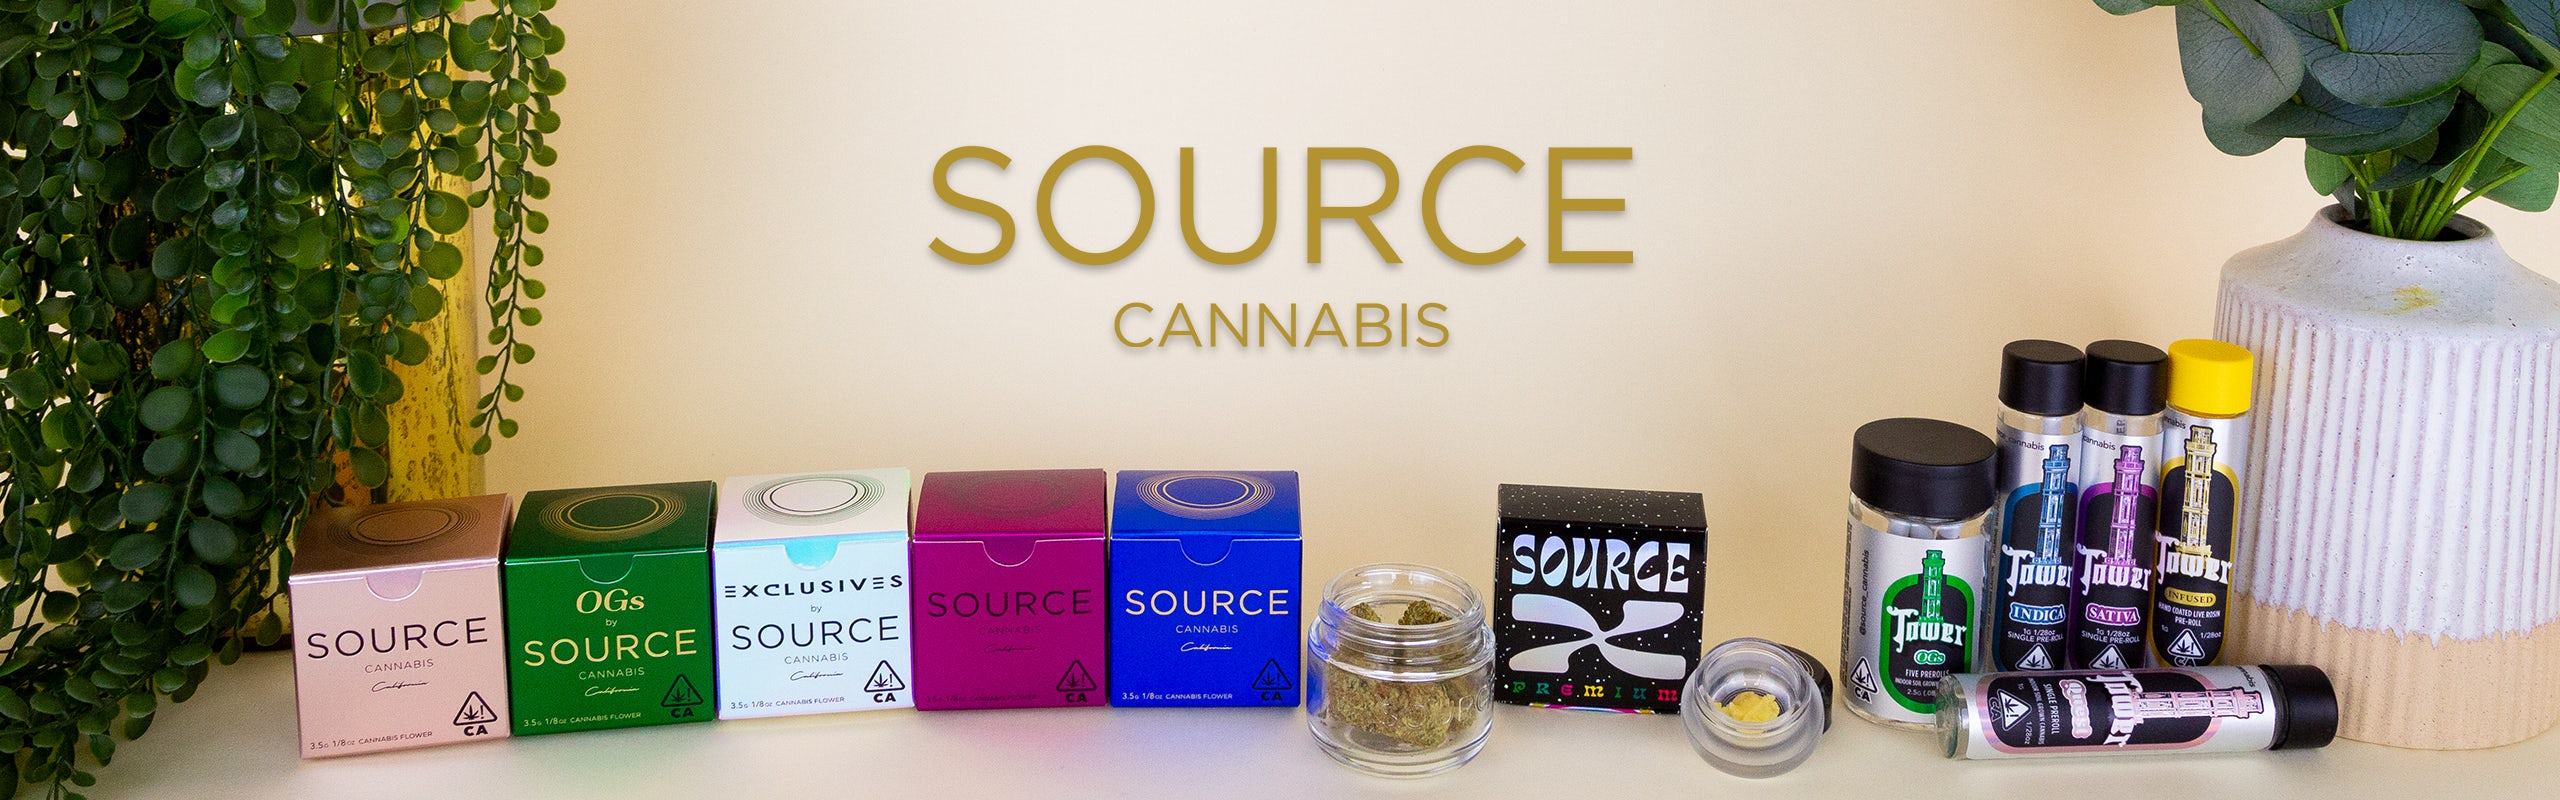 Source Cannabis banner